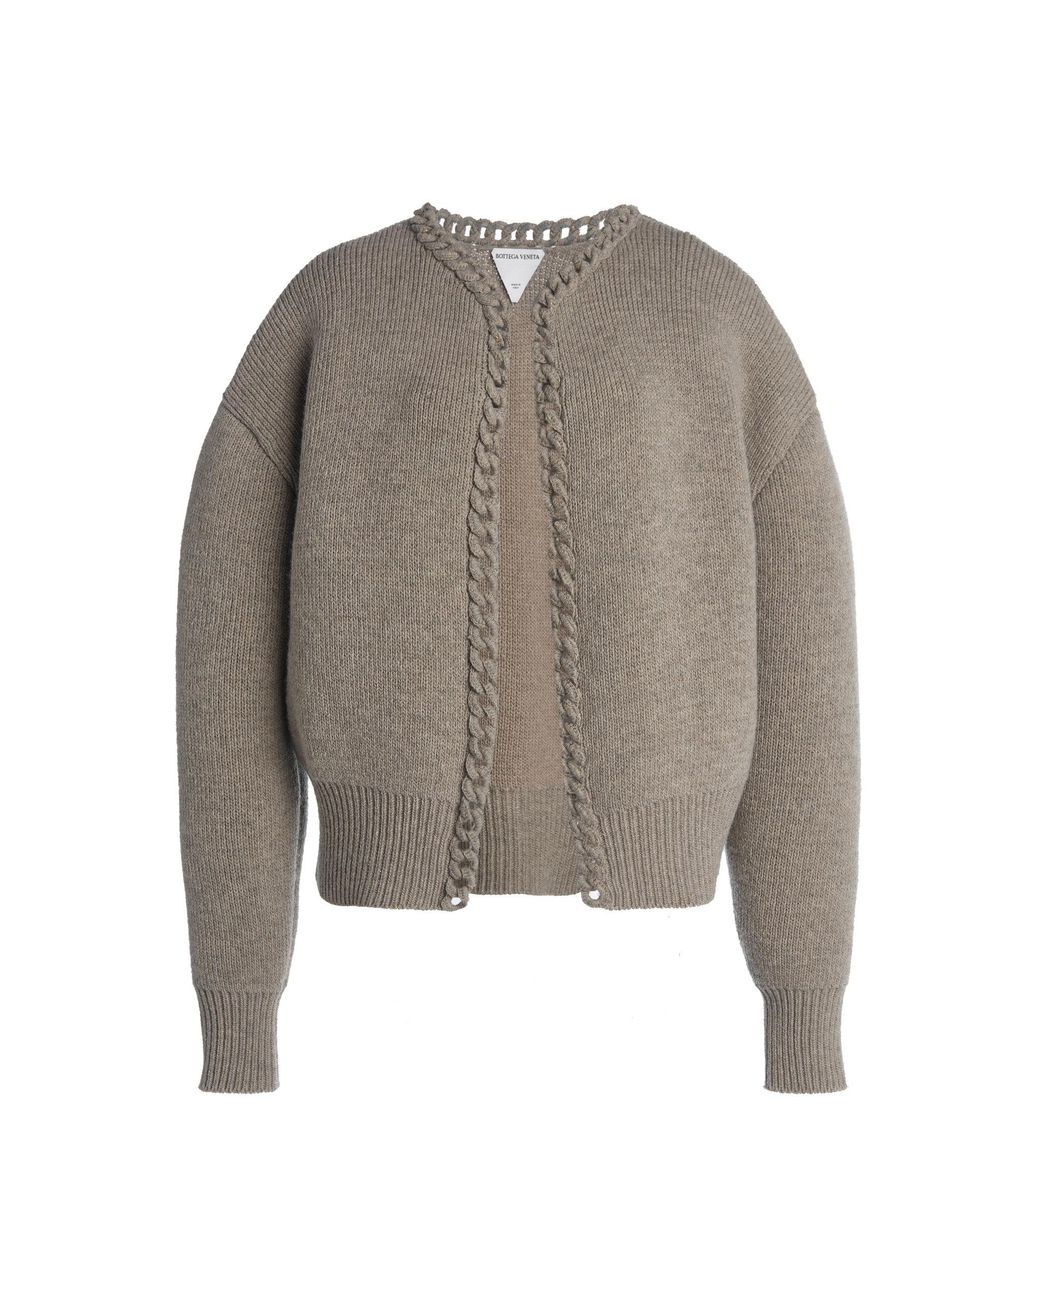 Bottega Veneta Chain-detailed Wool Cardigan in Grey (Gray) - Lyst